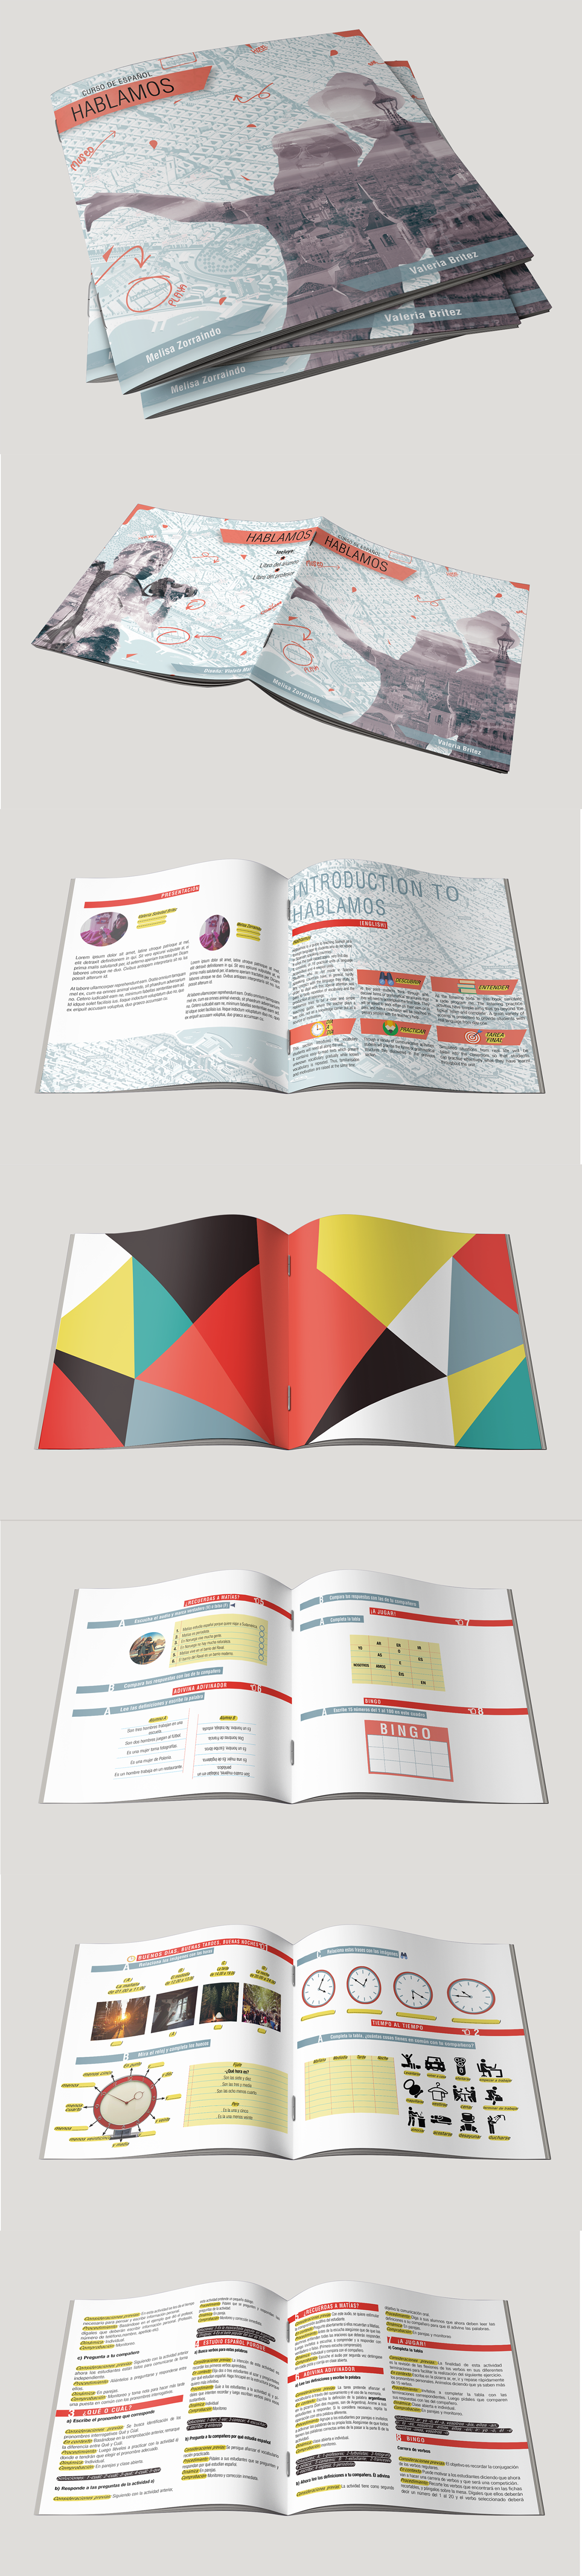 book editorial design  design maquetación libro Spanish course curso de español Layout Layout Design editorial layout